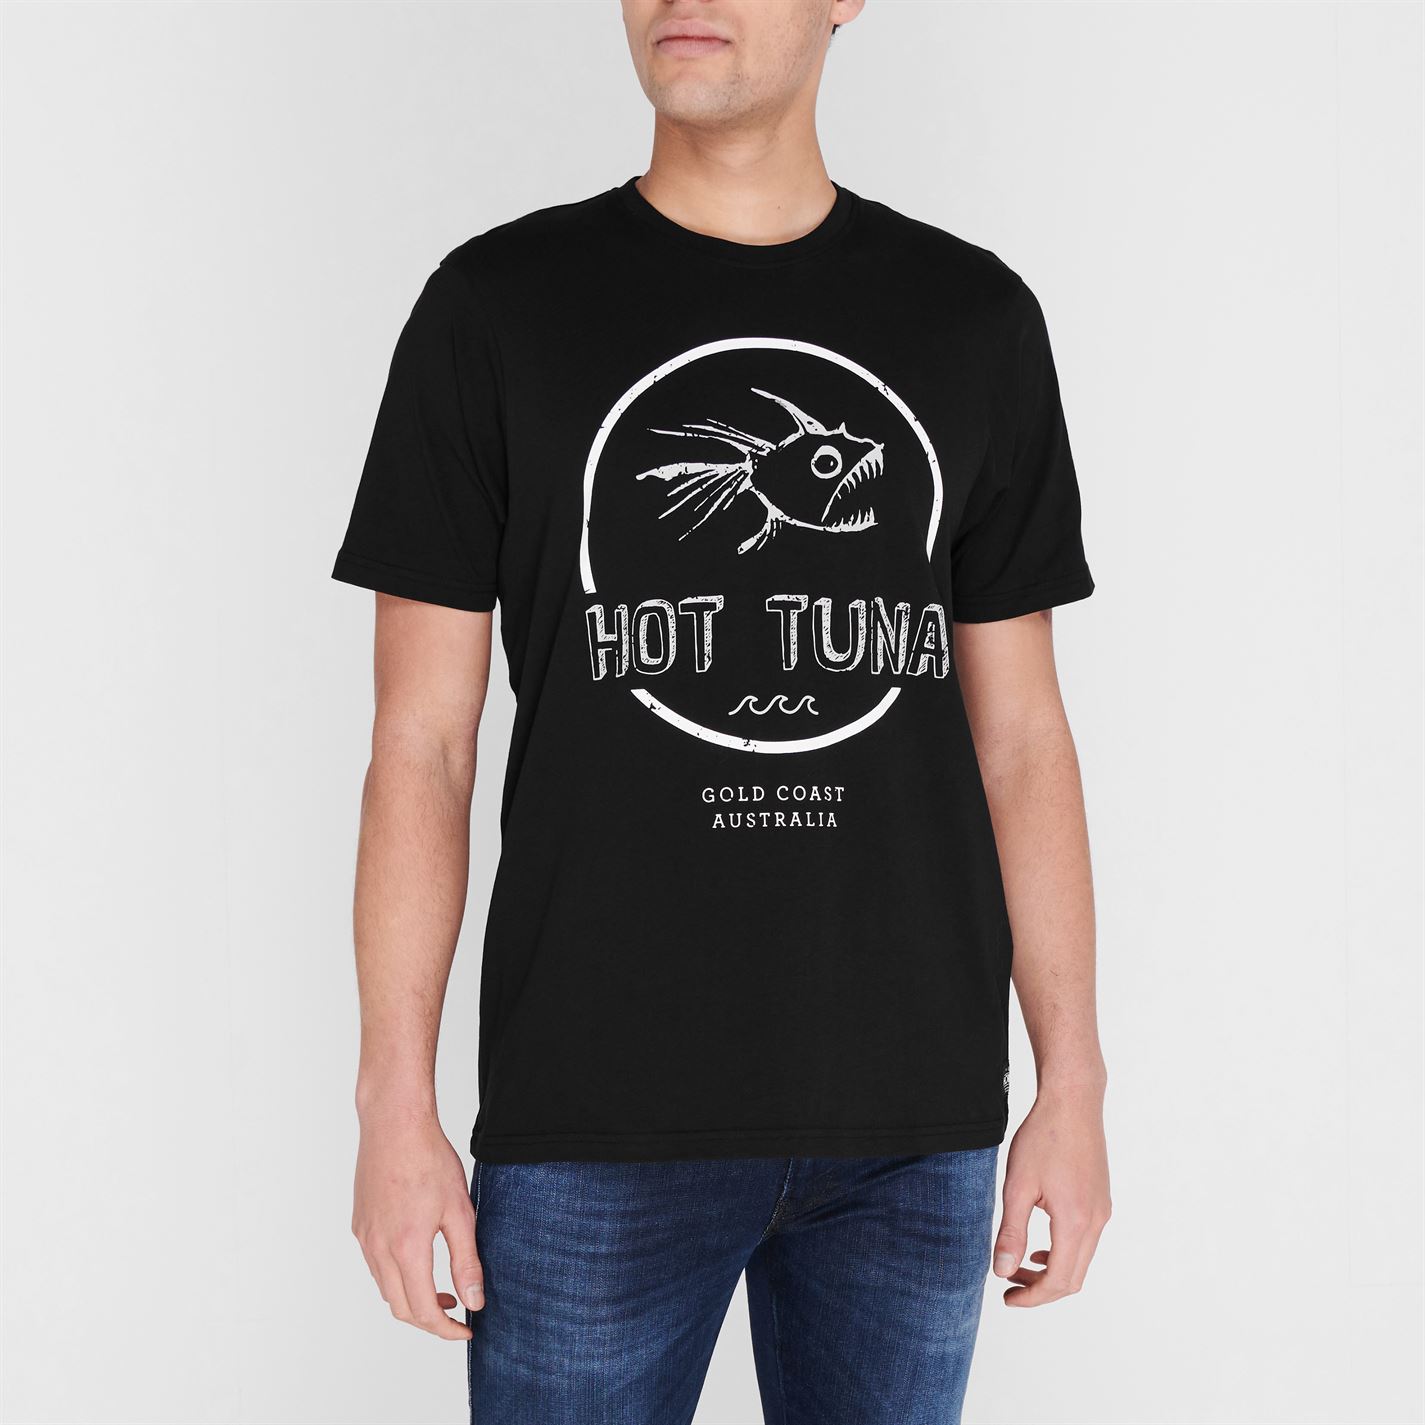 Men's T-shirt Hot Tuna Crew.